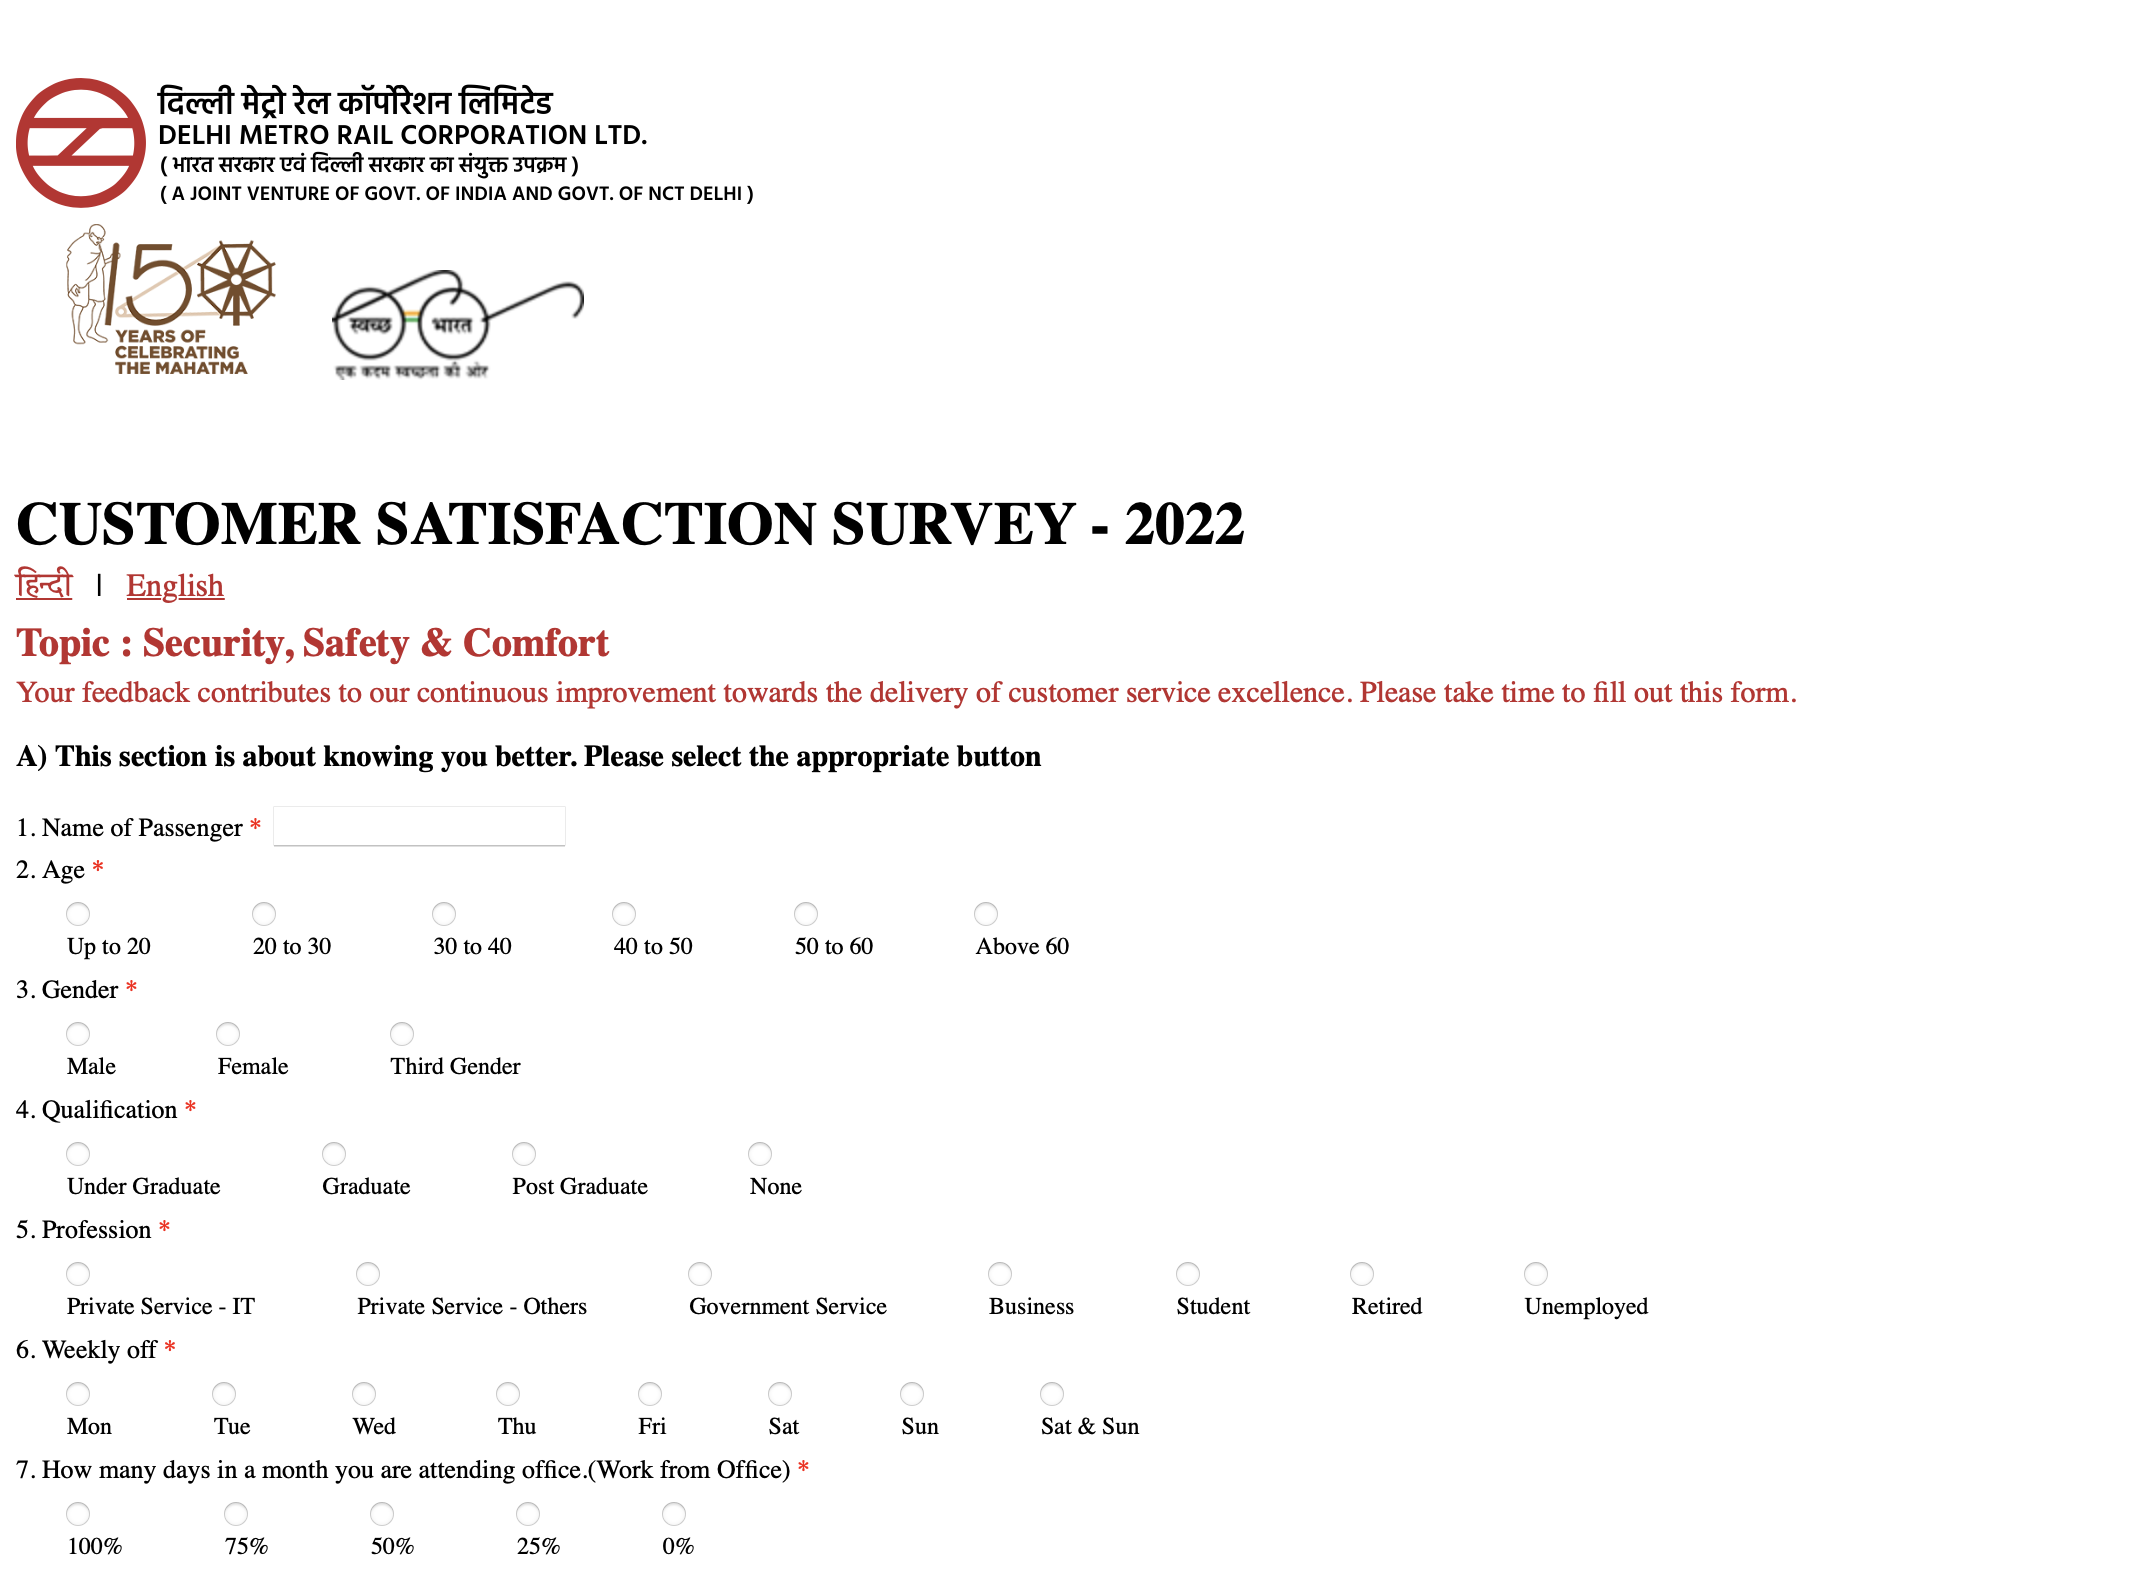 DMRC Customer Satisfaction Survey 2022 Survey Design